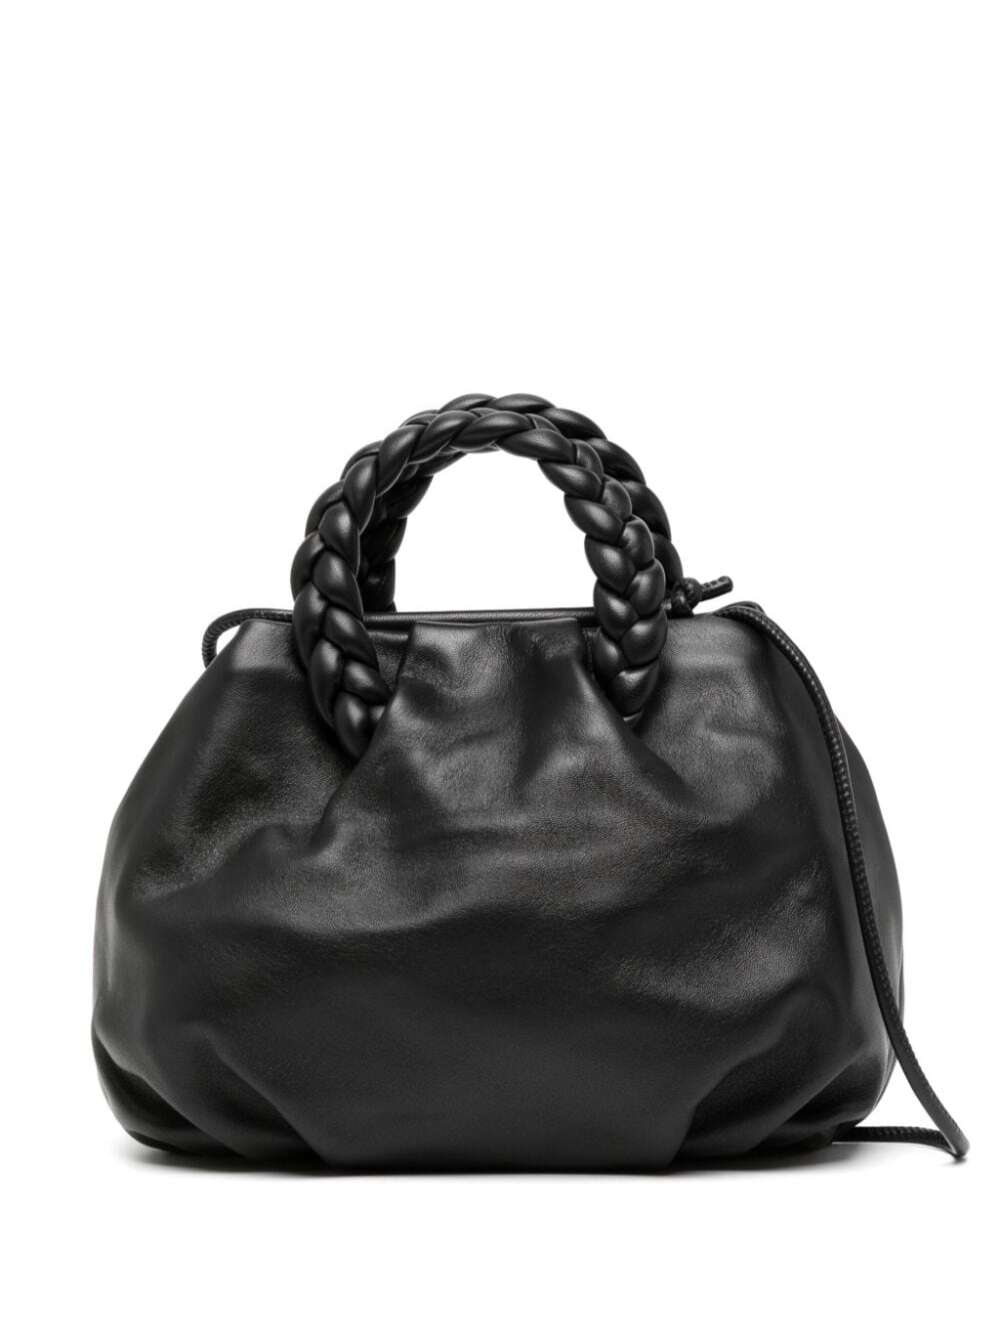 bombon M Black Handbag With Braided Handles In Shiny Leather Woman